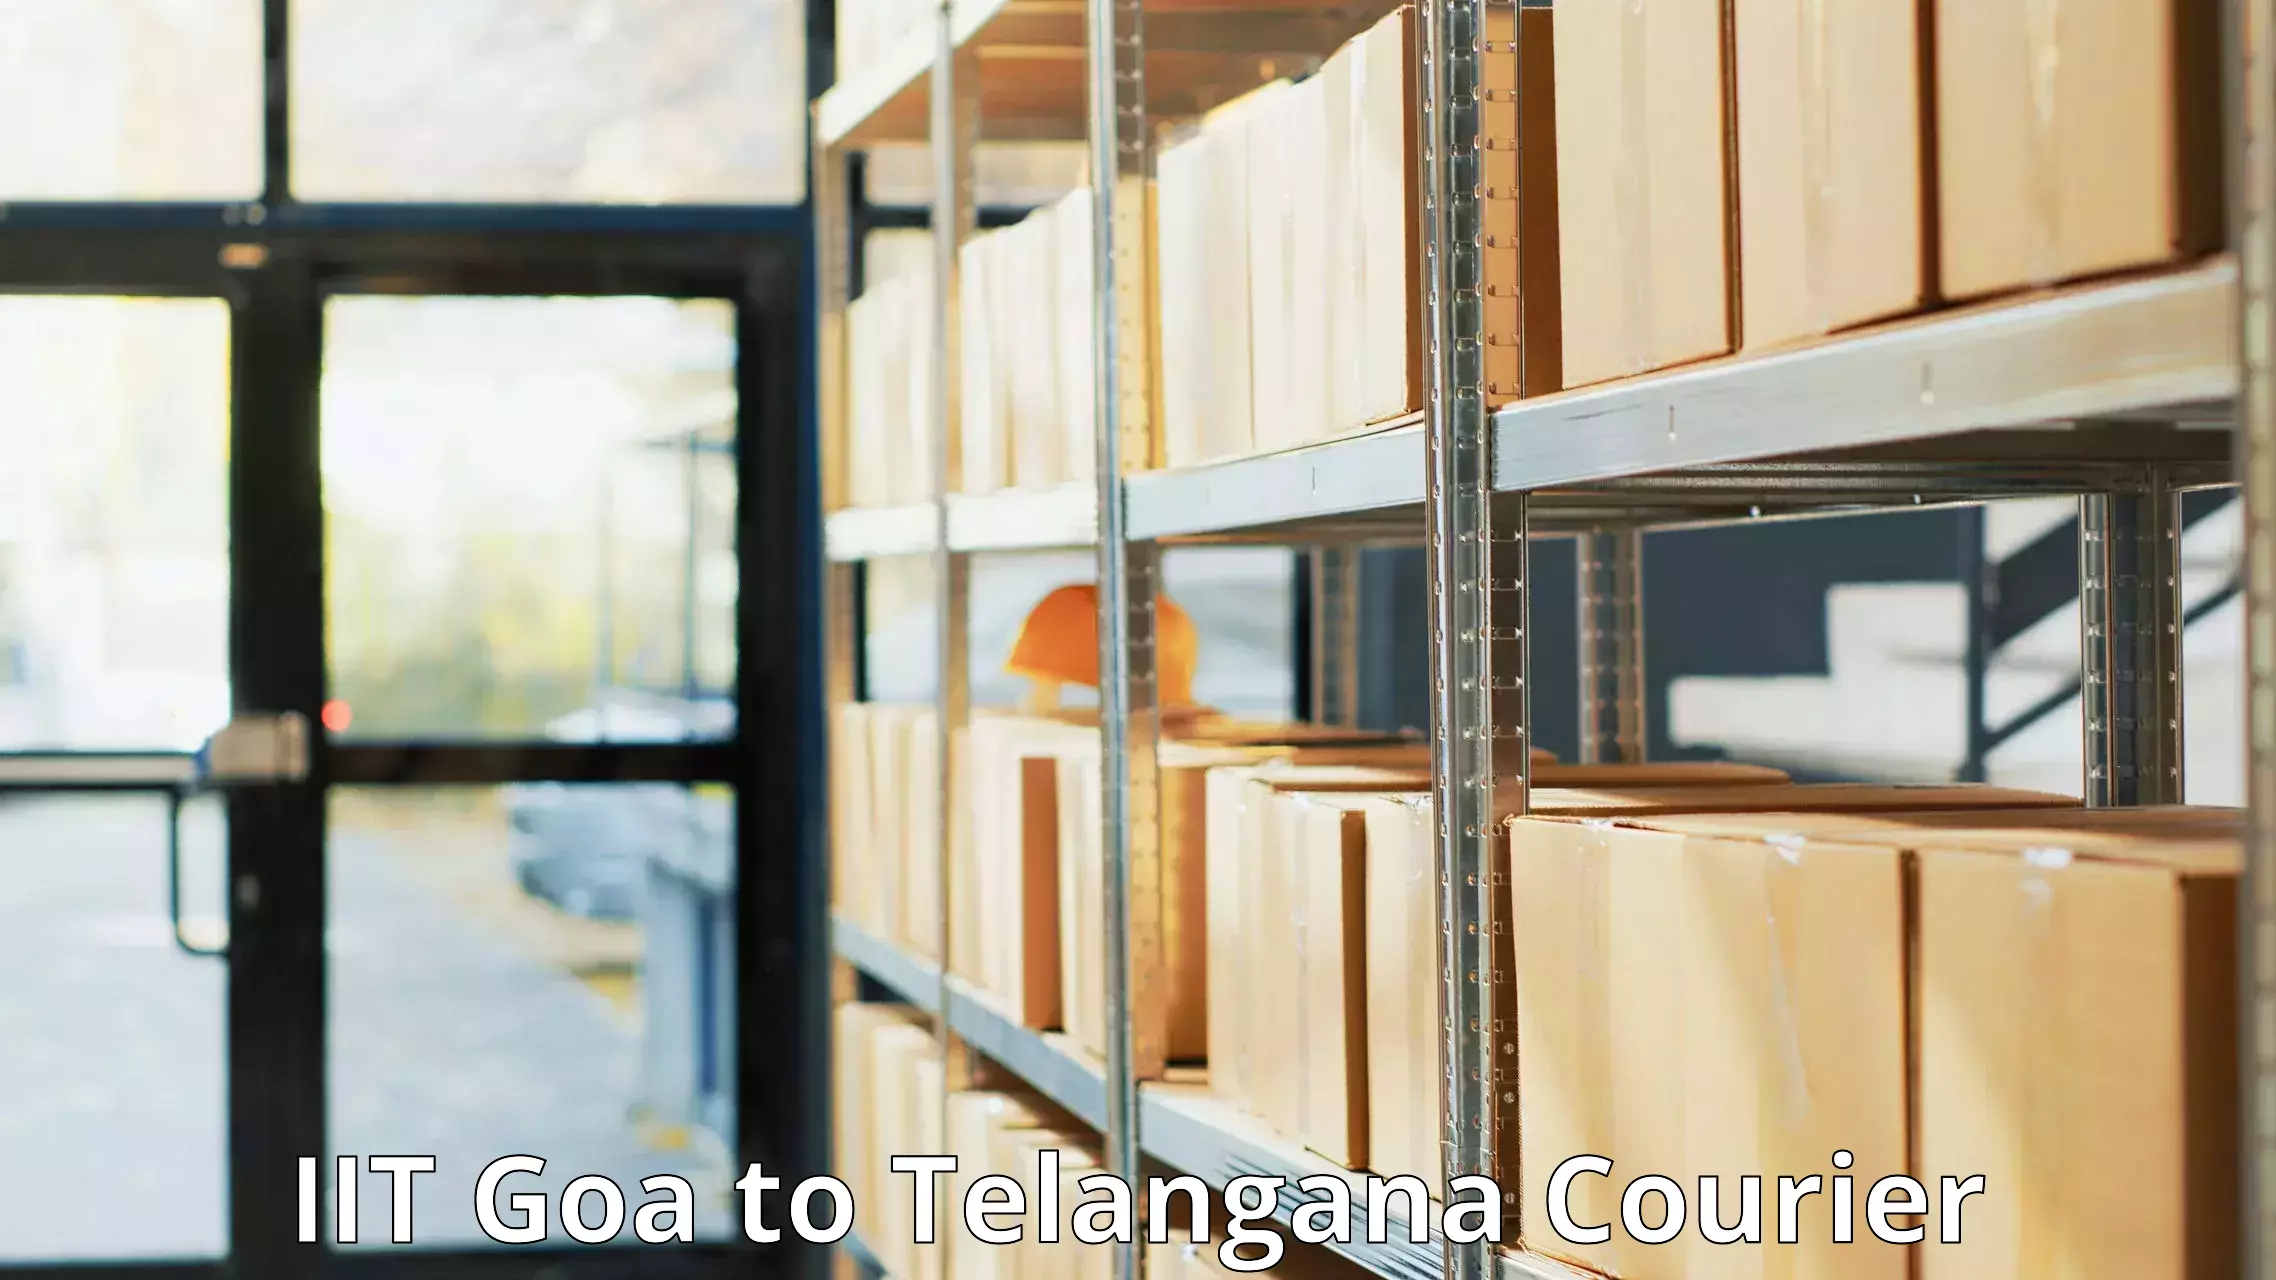 Global logistics network IIT Goa to Pargi